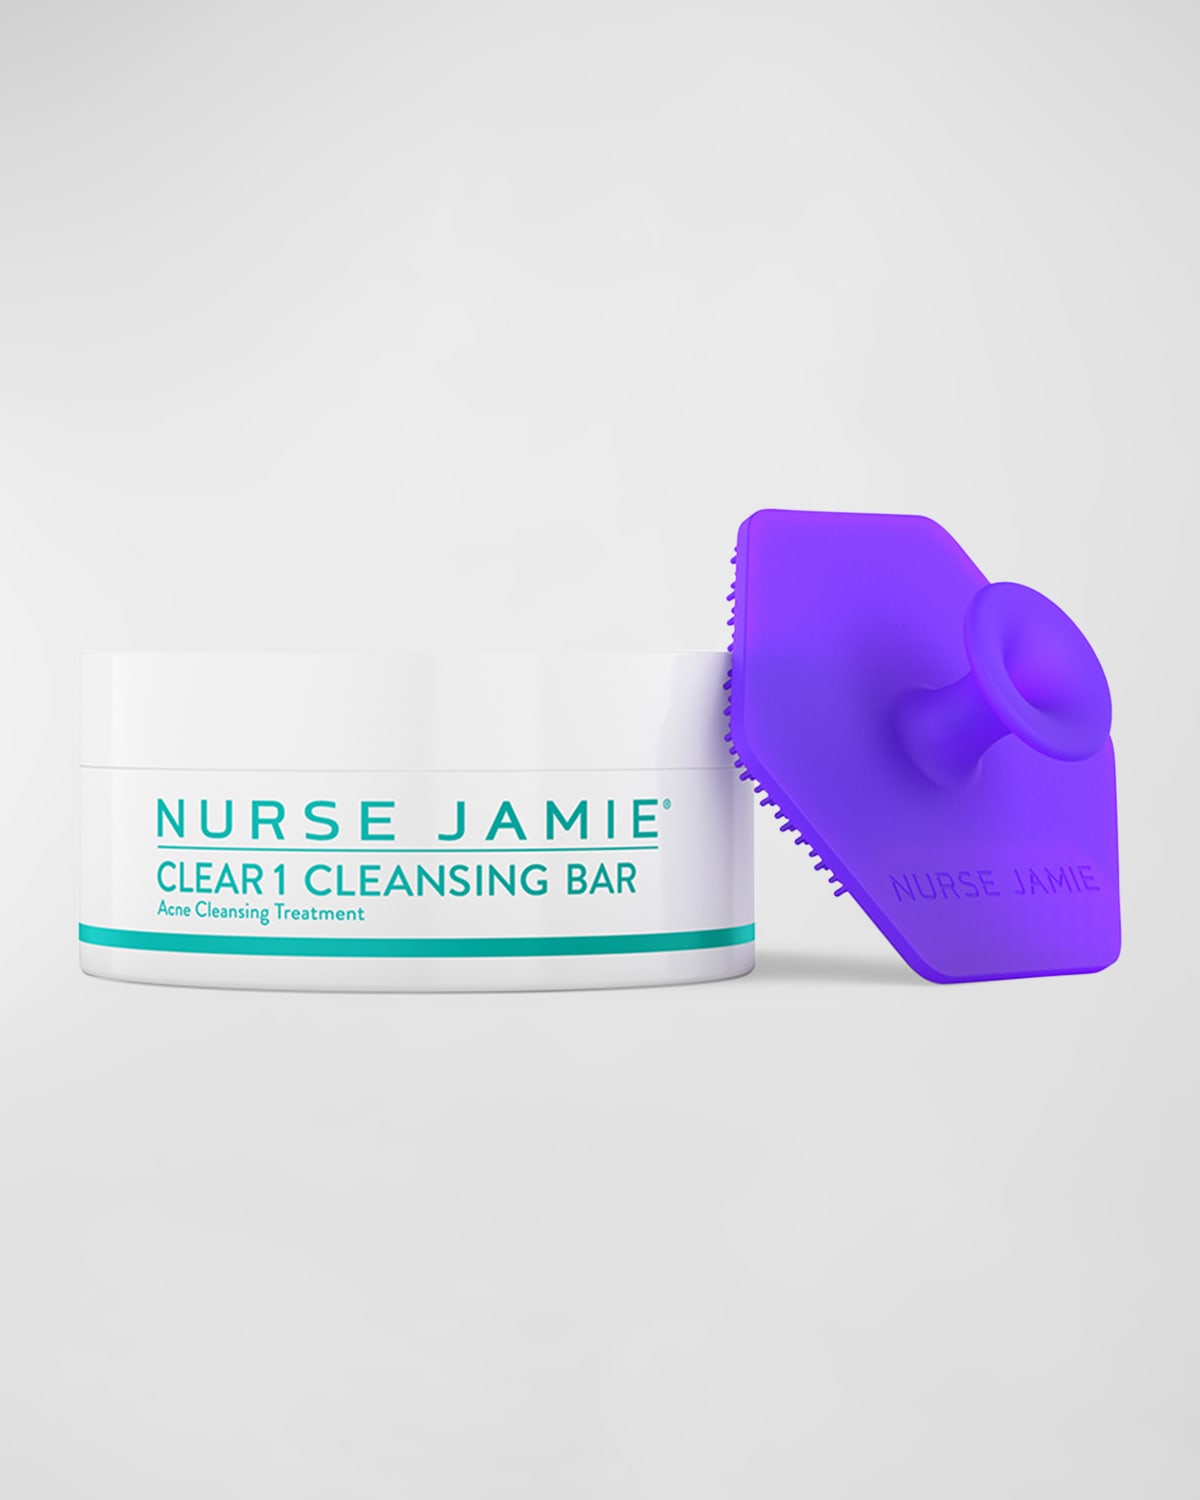 Clear 1 Acne Cleansing Bar in a Jar